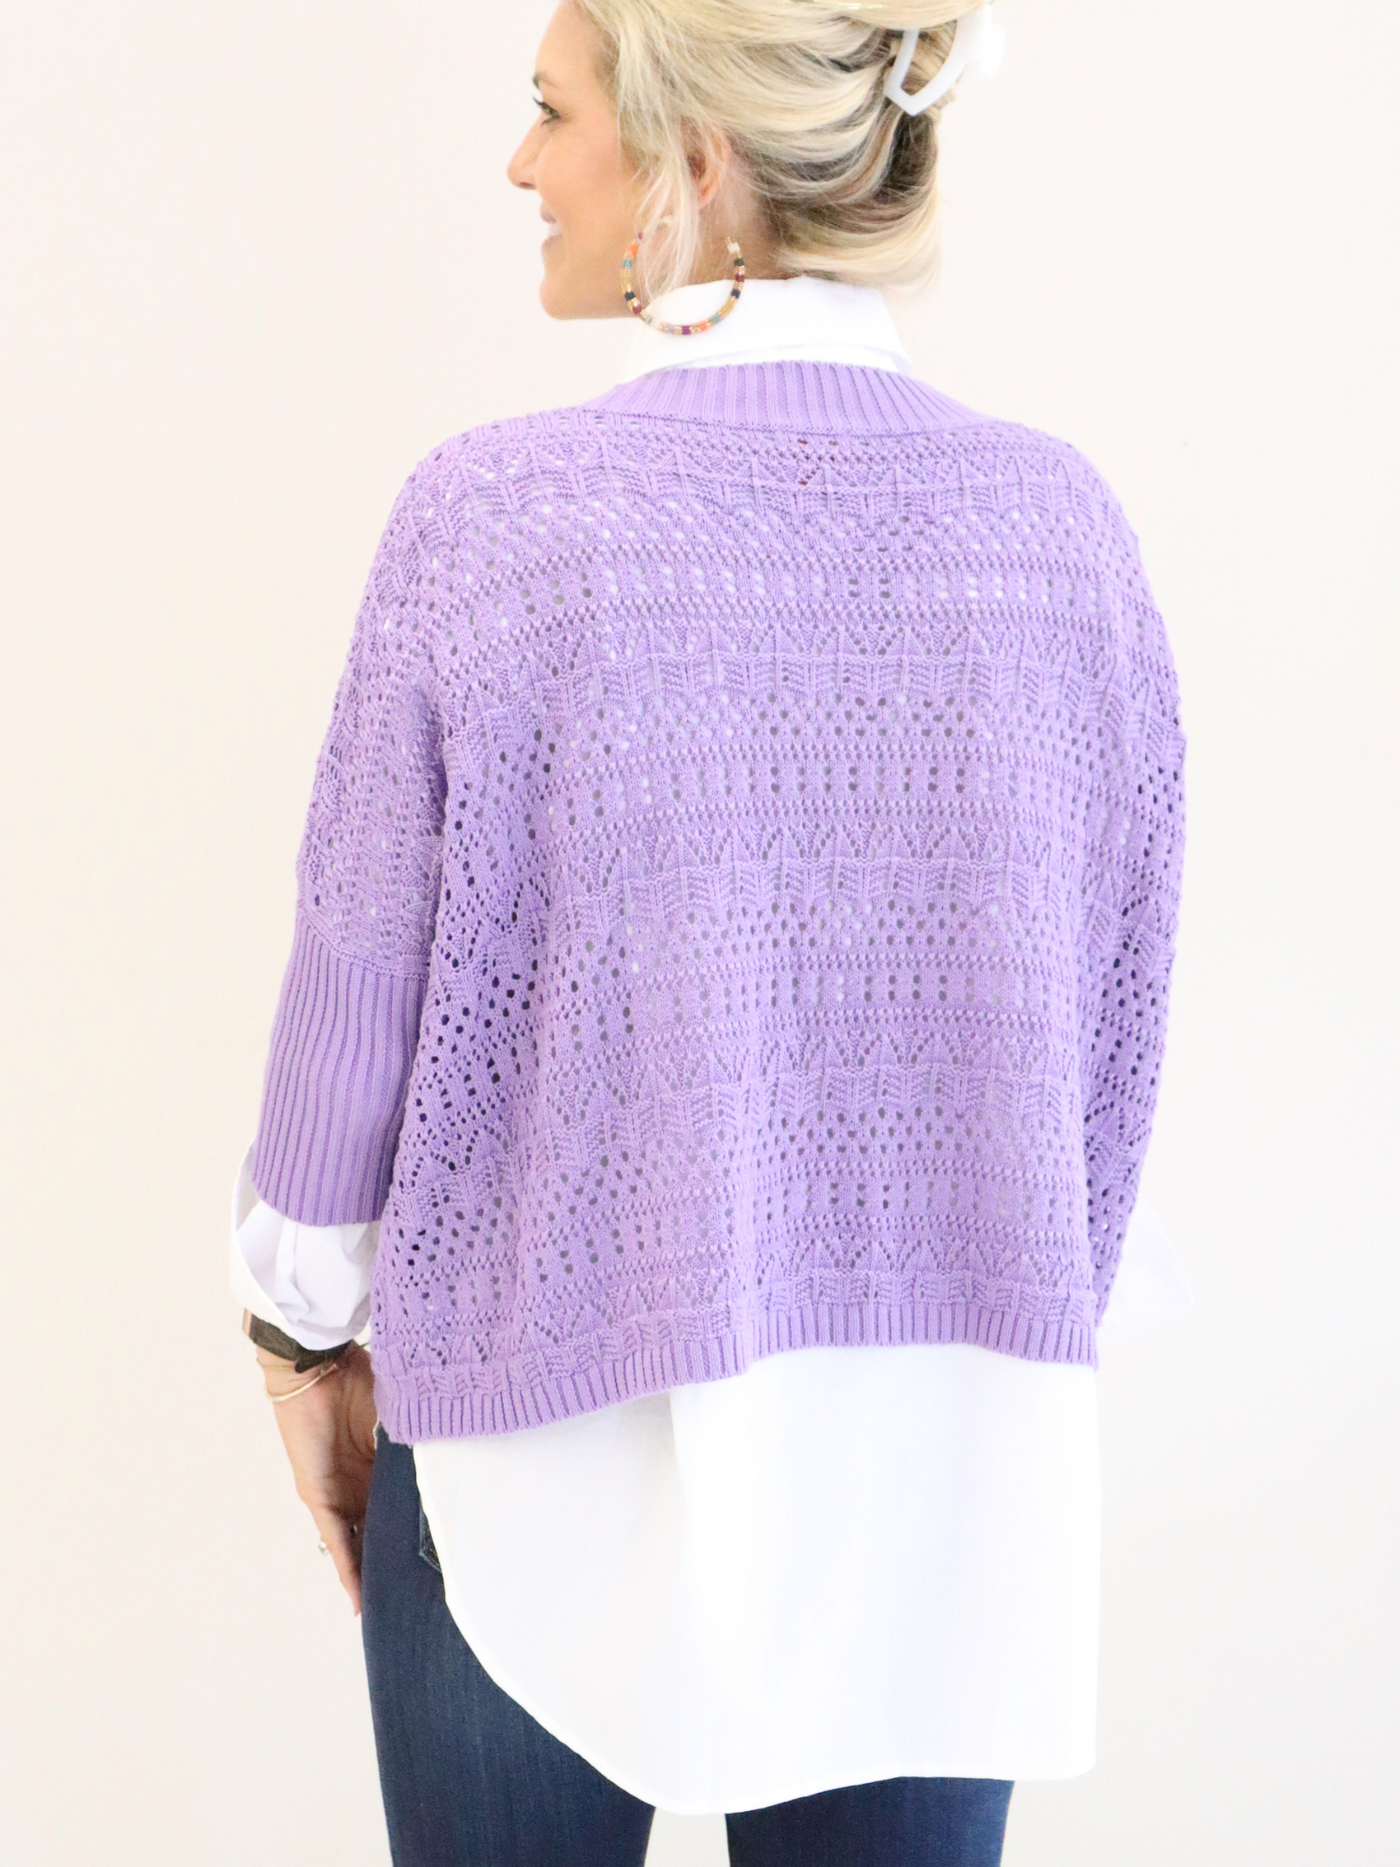 Reina Crochet 3/4 Sleeve Sweater Lavender back view. 